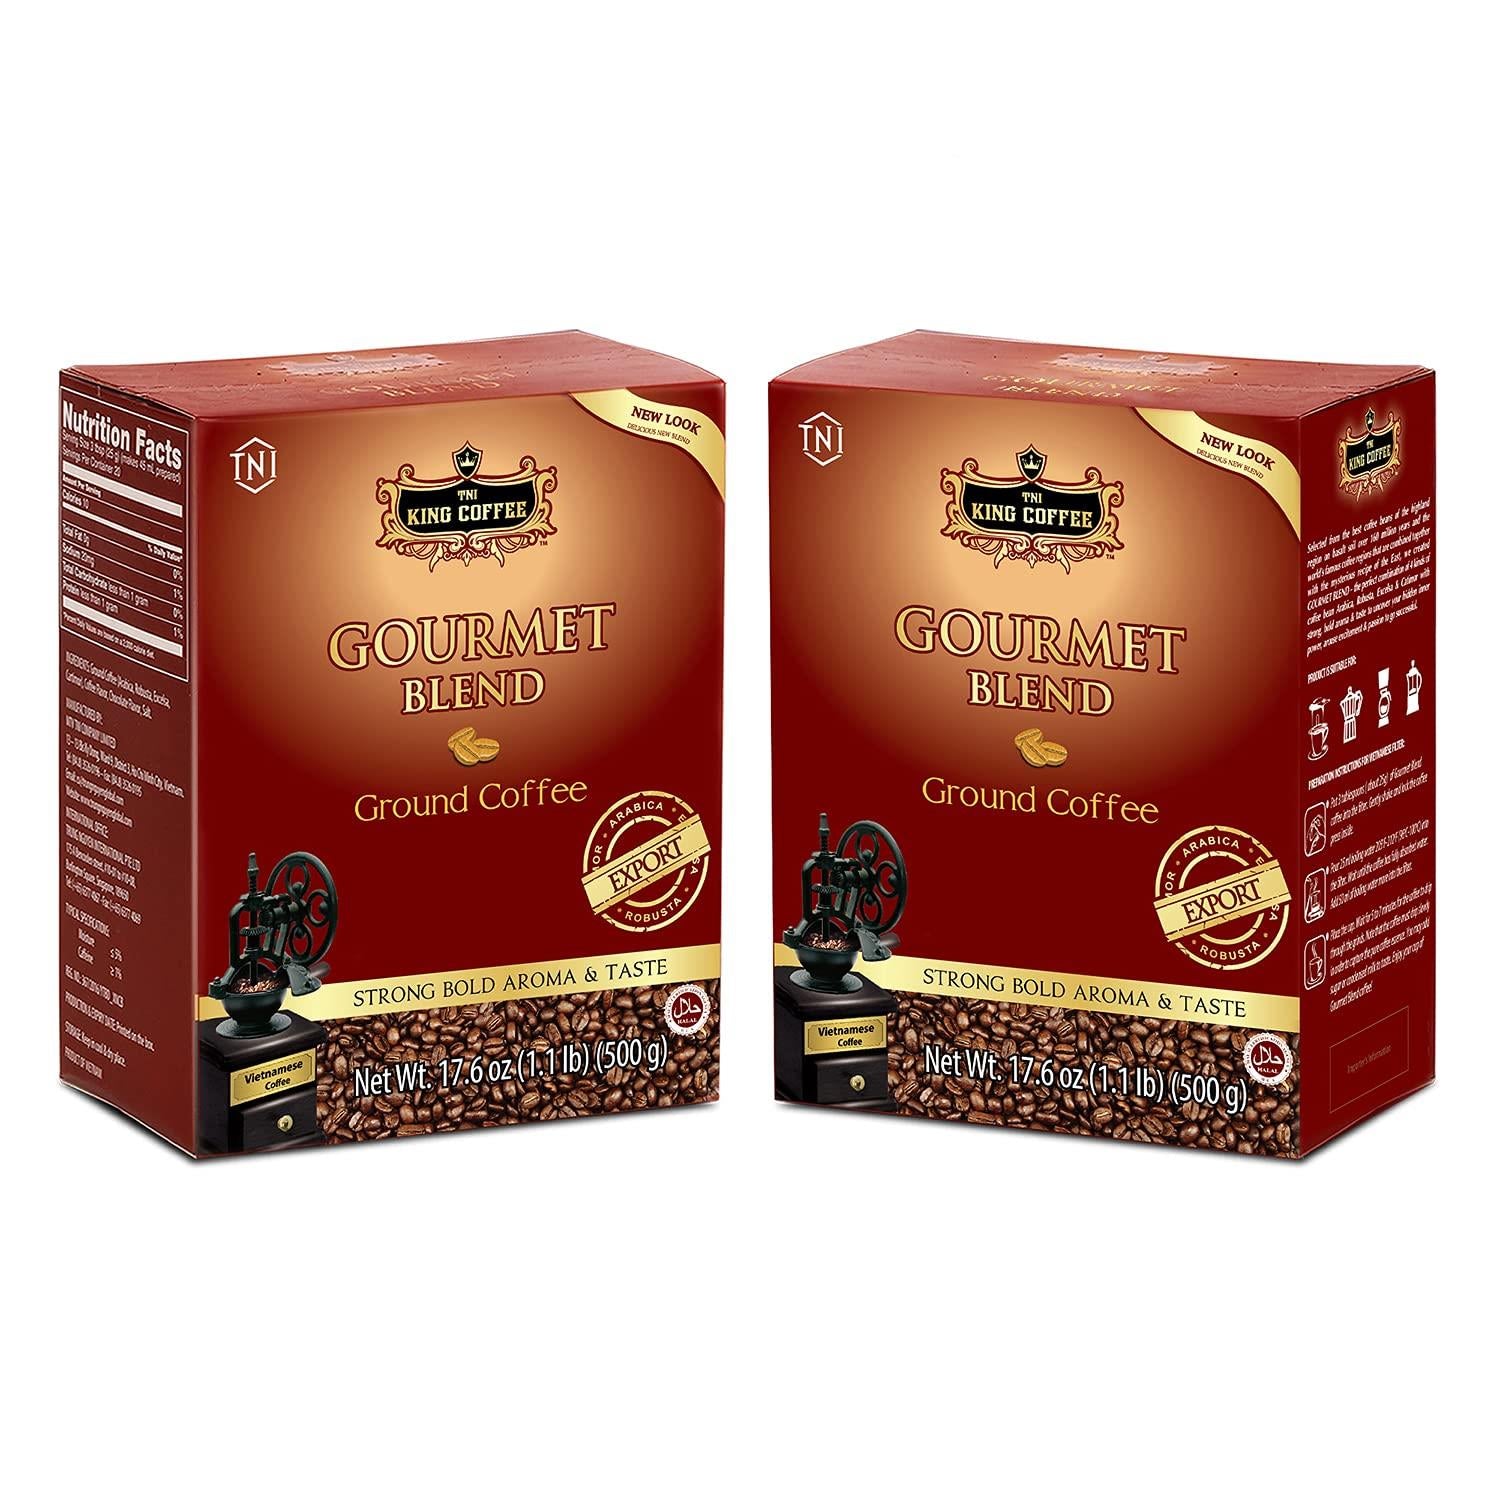 TNI King Coffee Gourmet Blend Premium, Vietnamese Ground Coffee 500g (17.6 oz), Arabica Robusta Roast, Strong, Bold Aroma & Taste, Pack of 2